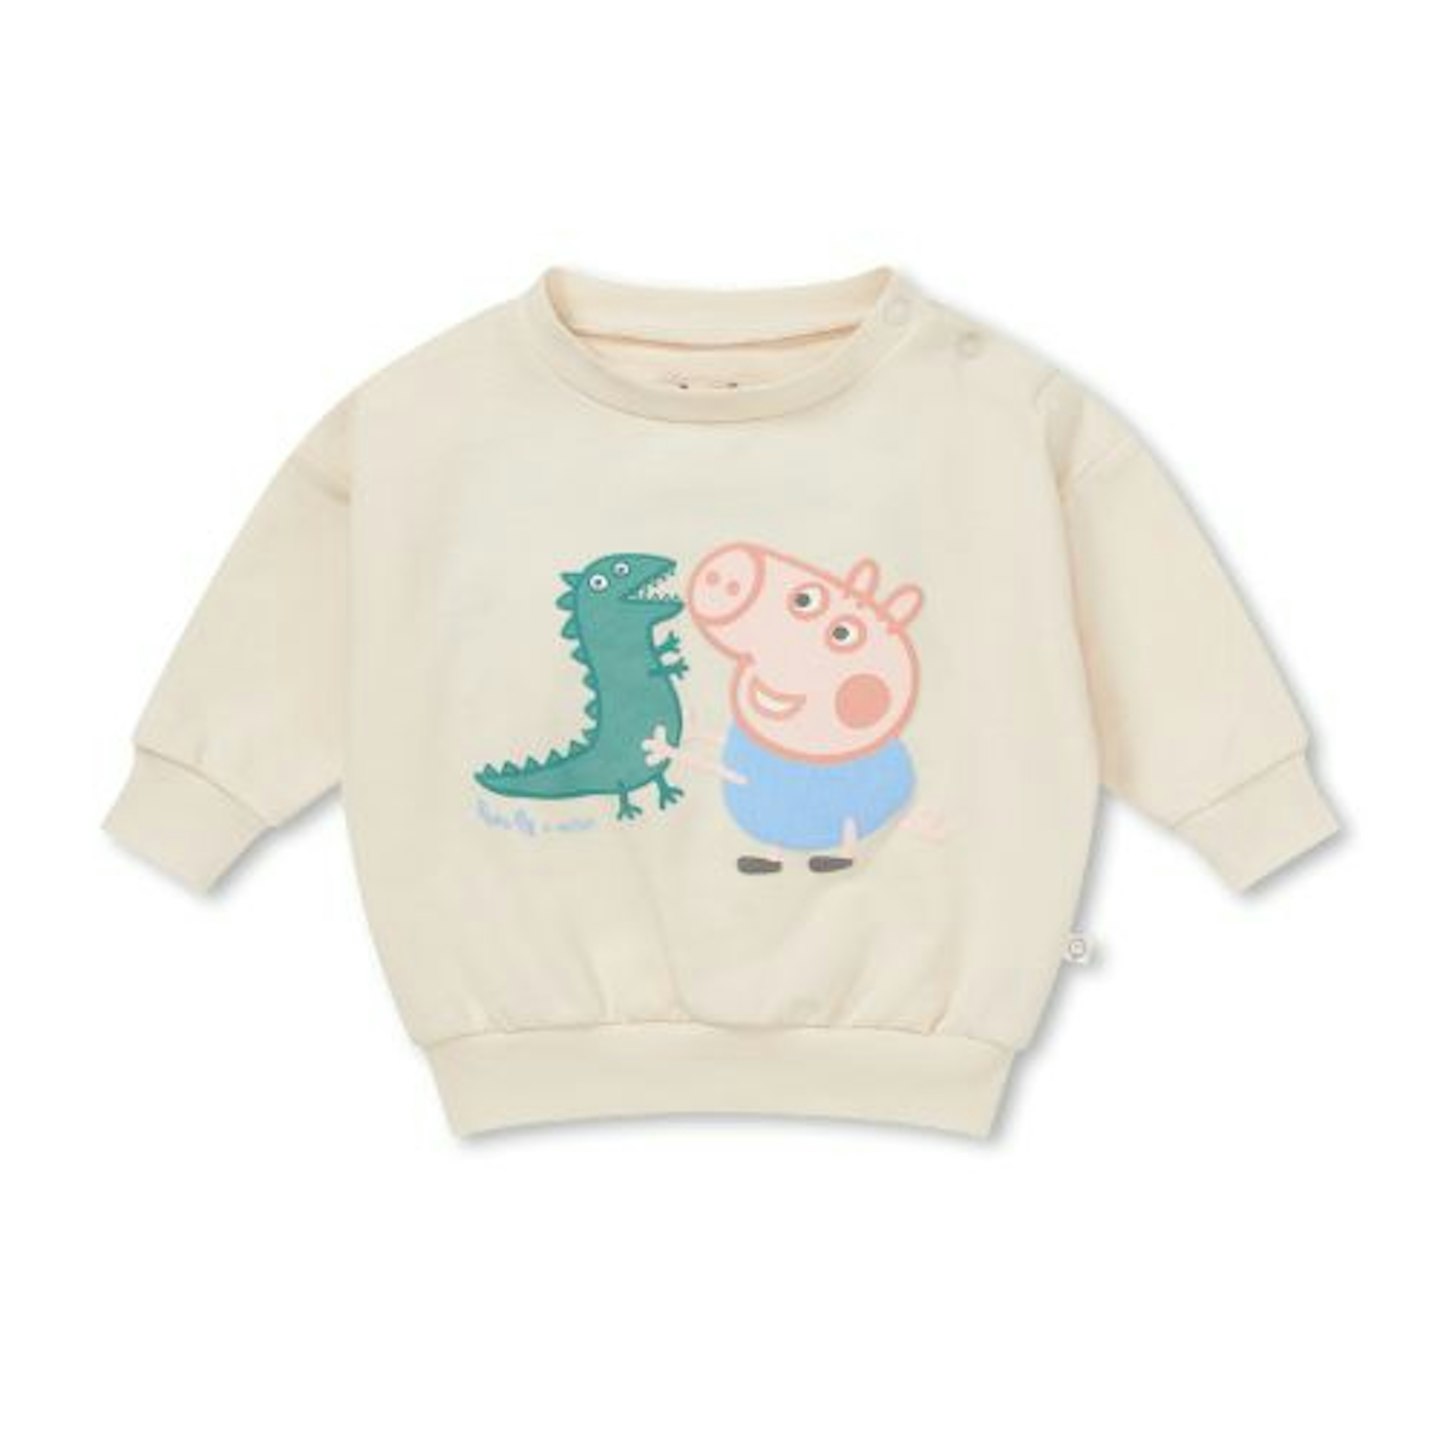 George Pig Organic Cotton Sweatshirt